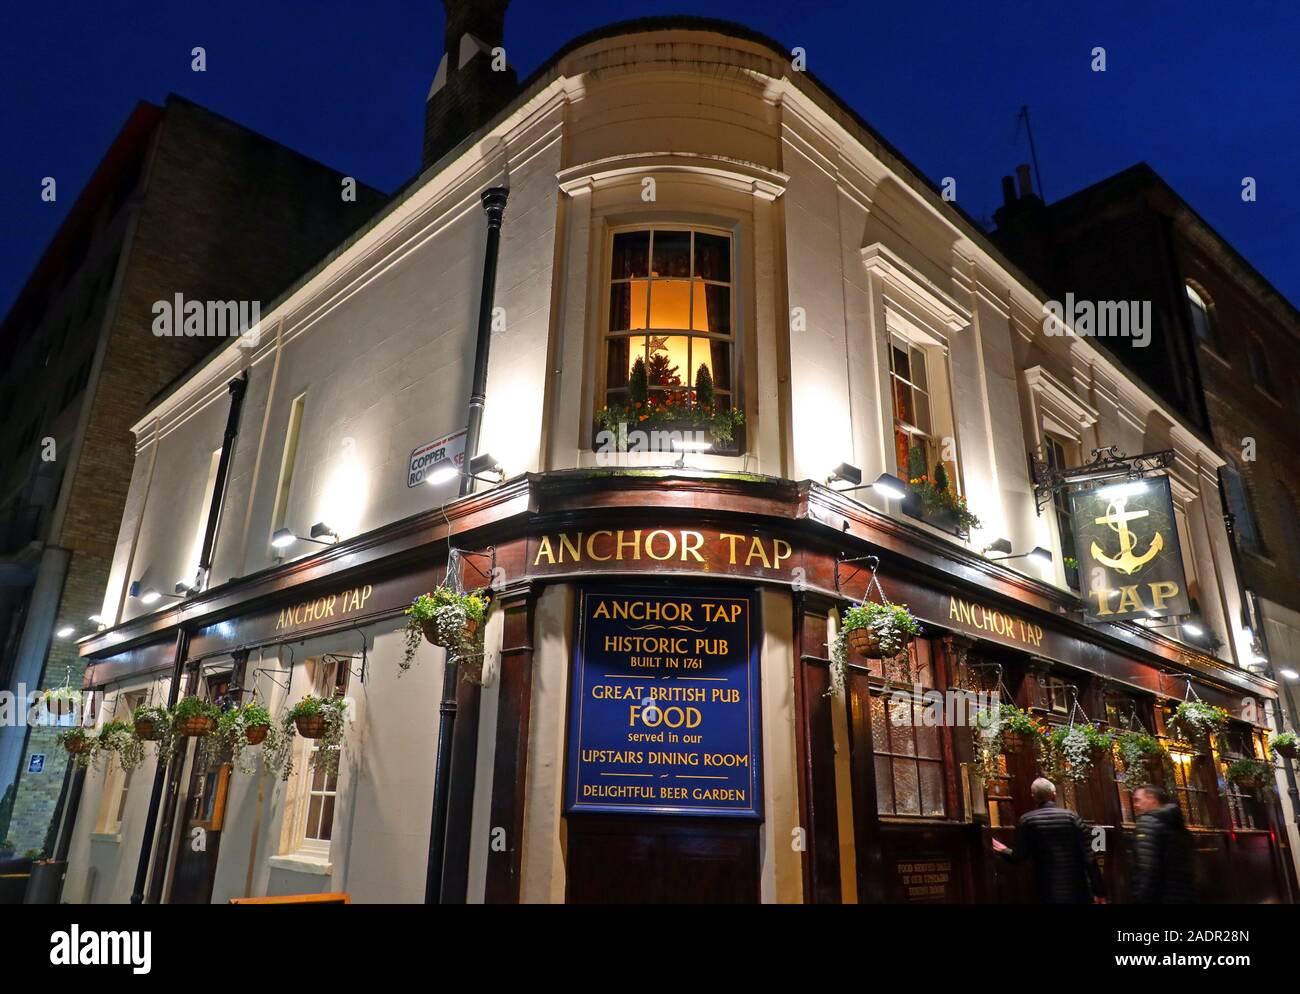 Anchor Tap, Historic Pub, Londra - 20A Horselydown Lane, South East London, England, UK, SE1 2LN, al tramonto, notte, sera Foto Stock